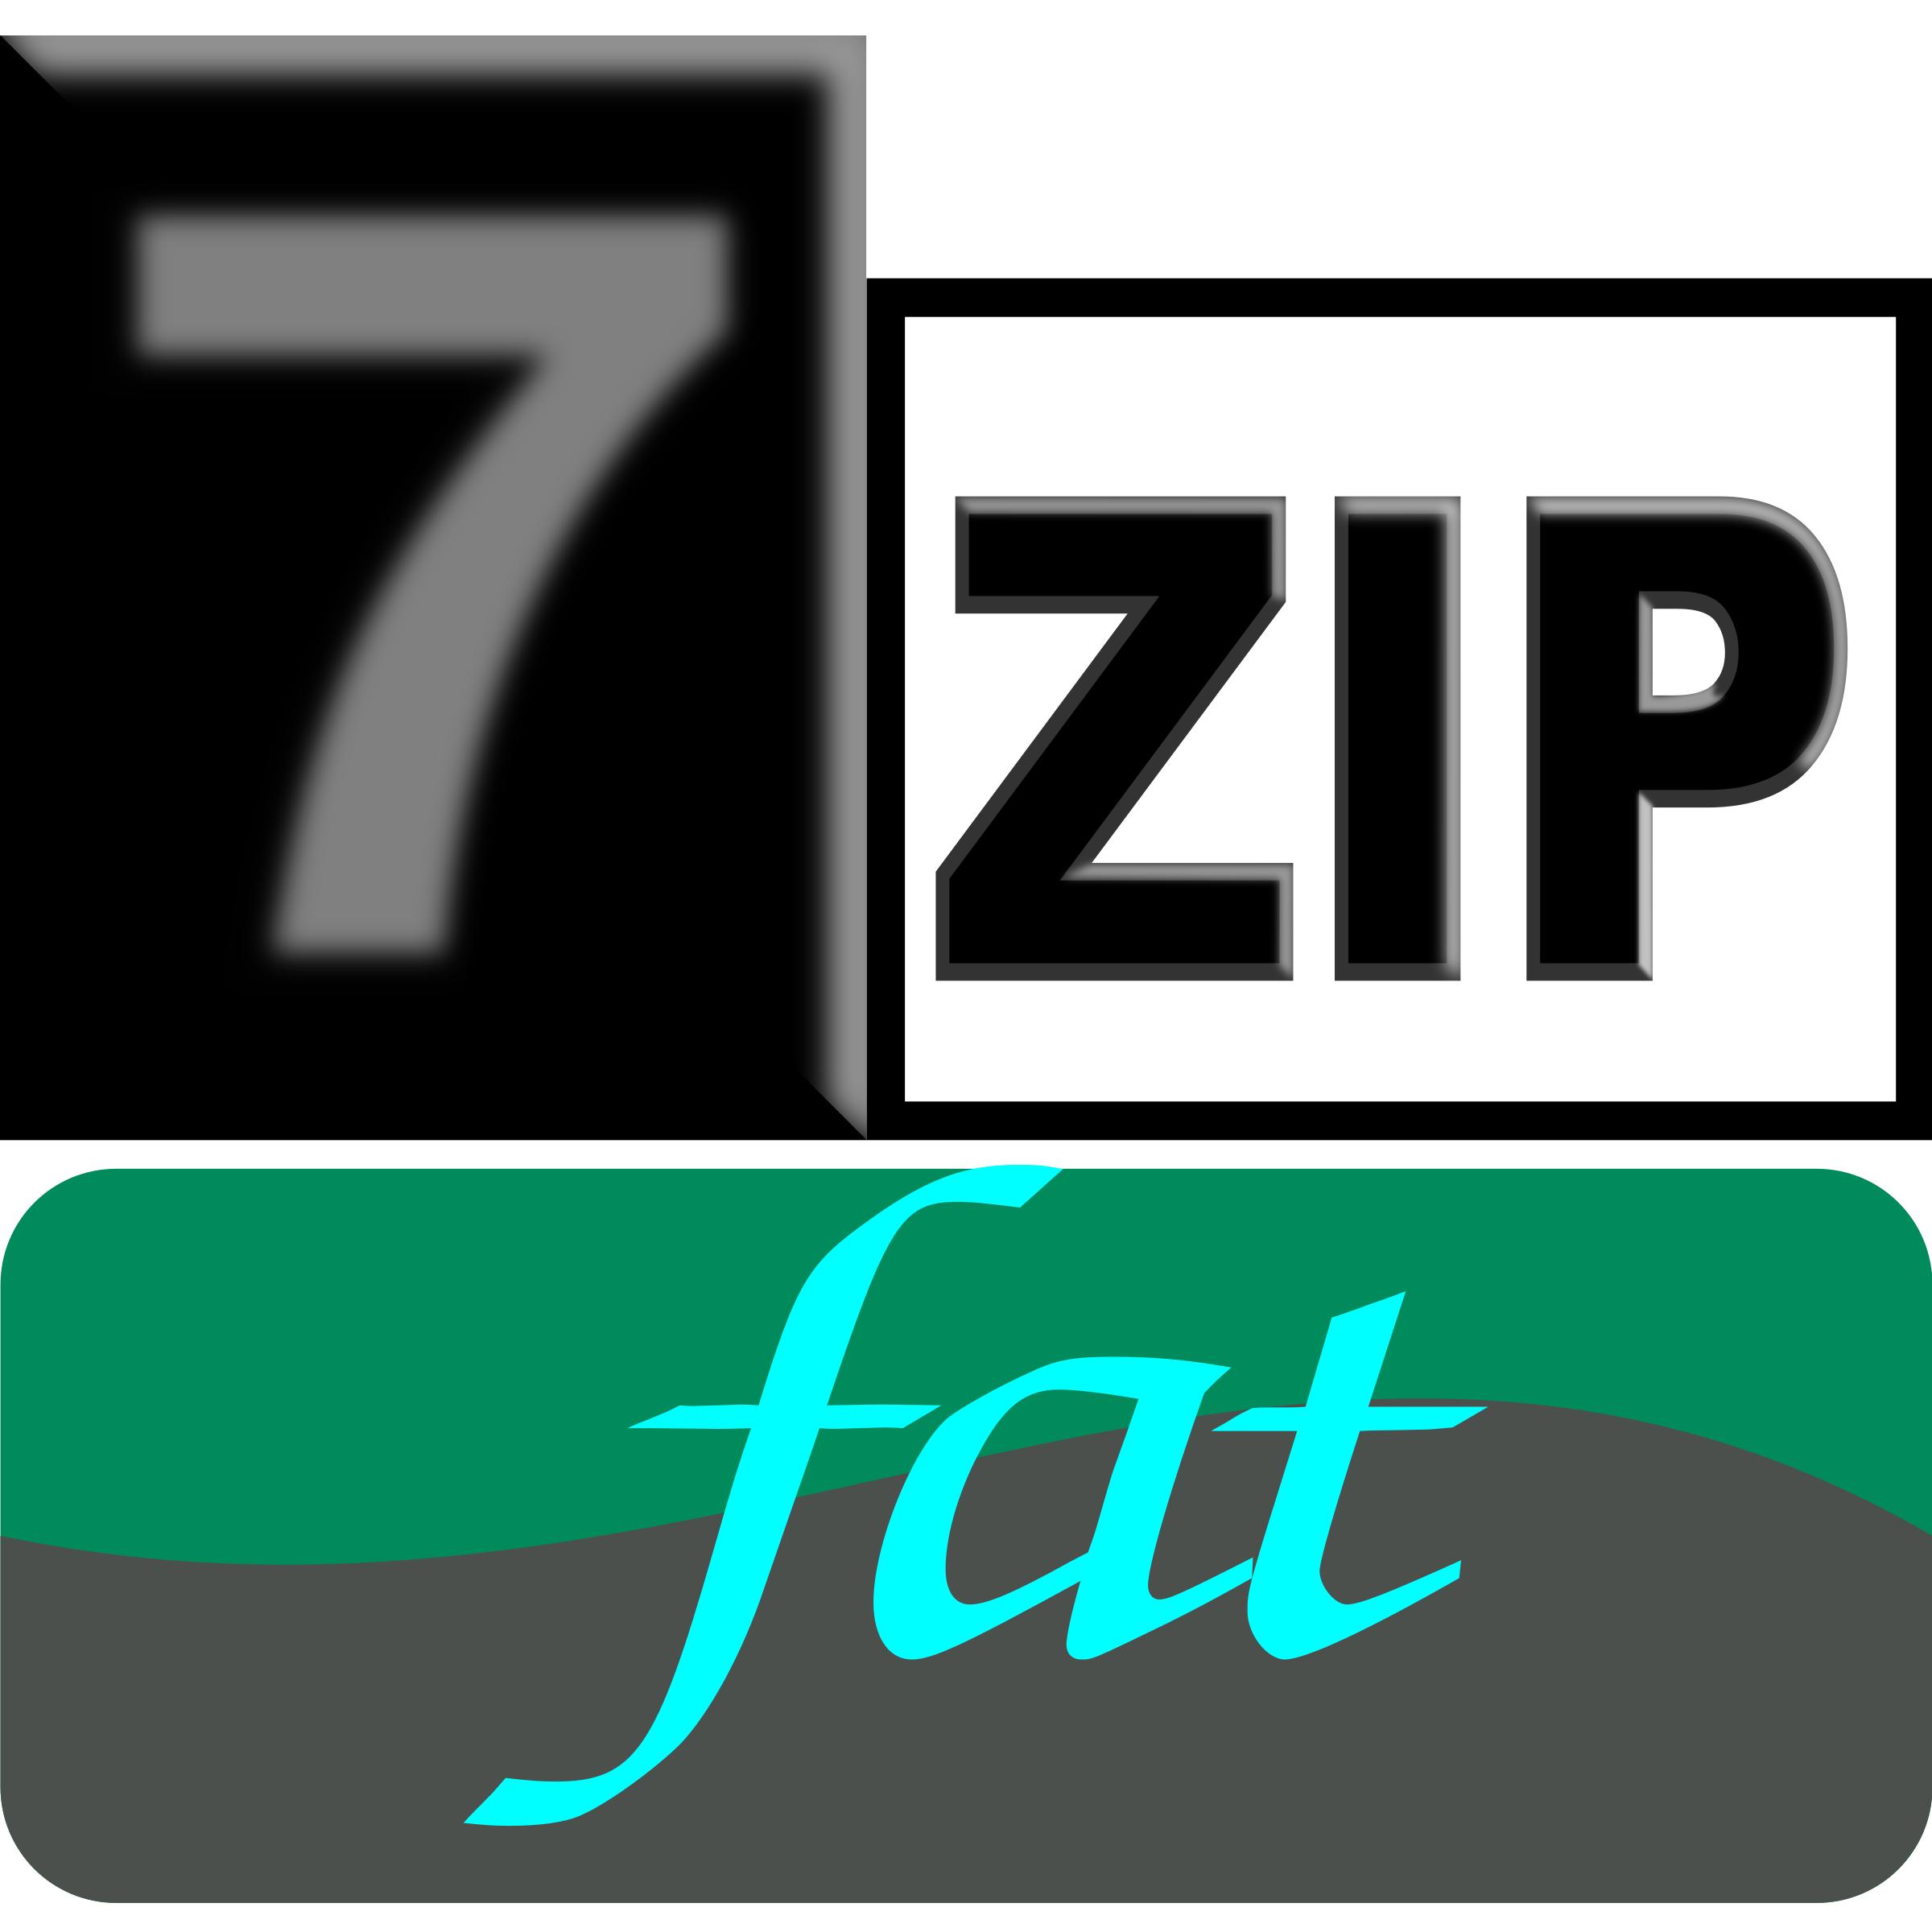 7zipClassic-fat png